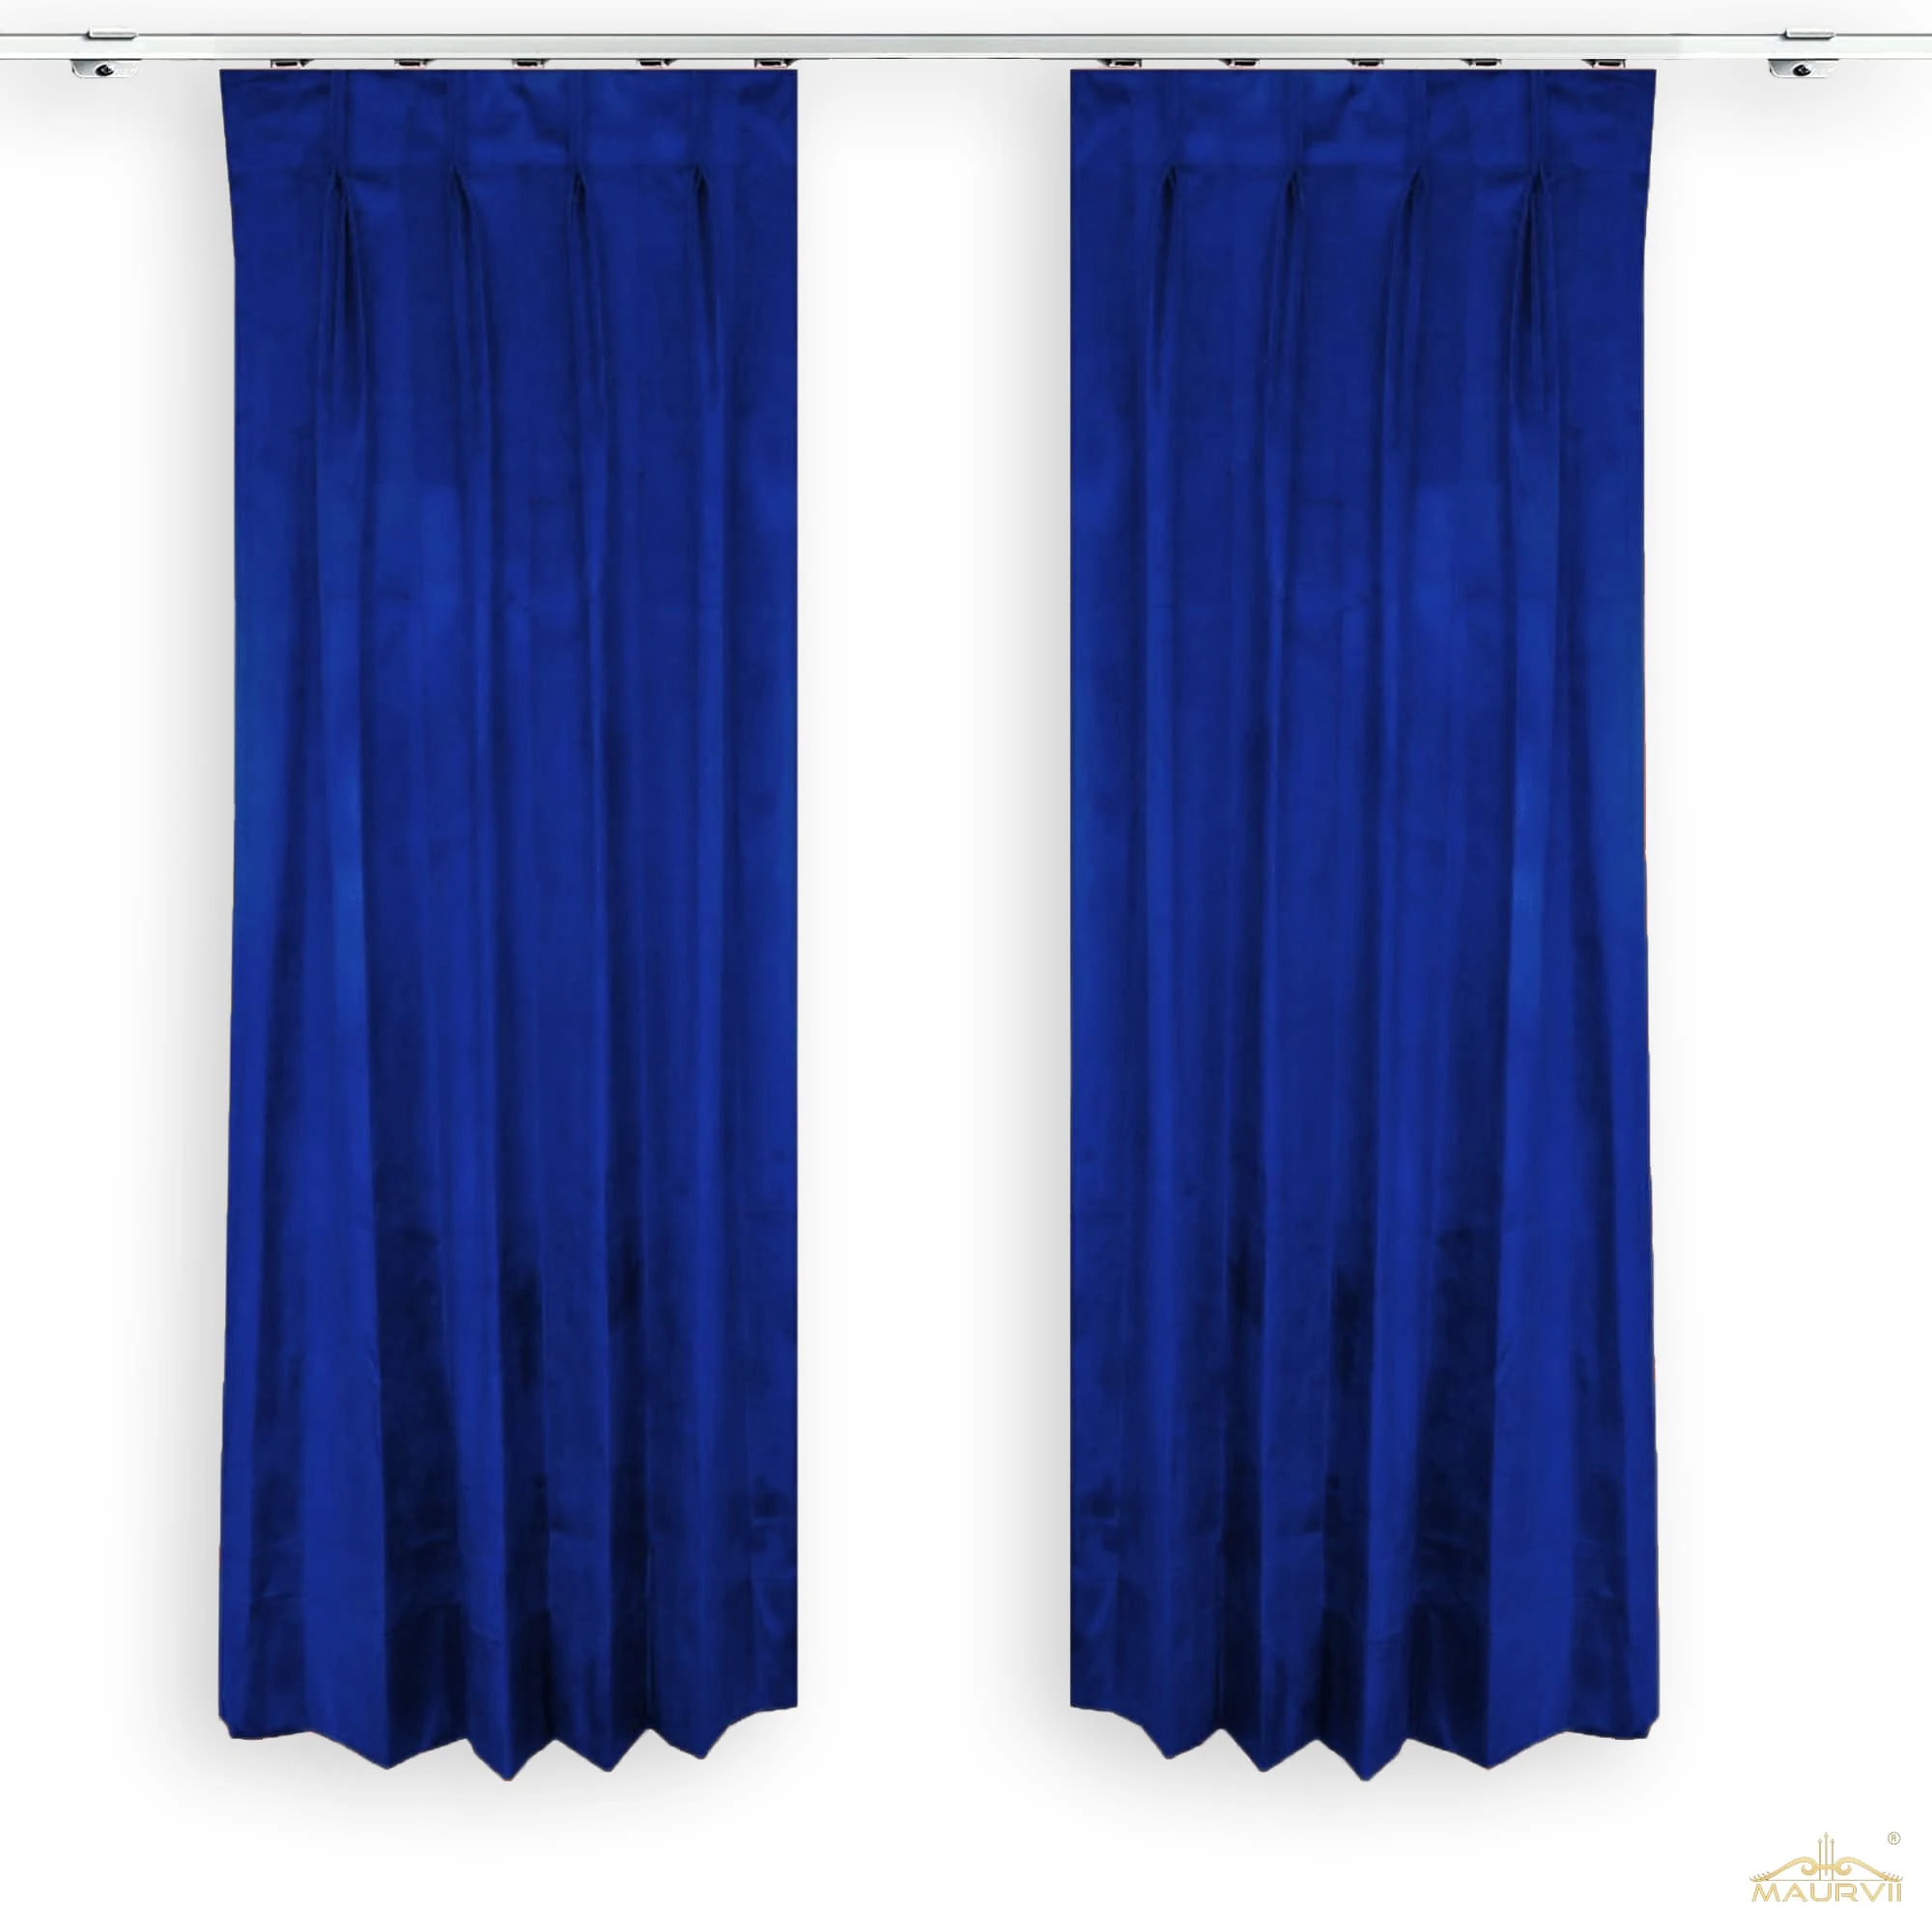 Blue room curtains